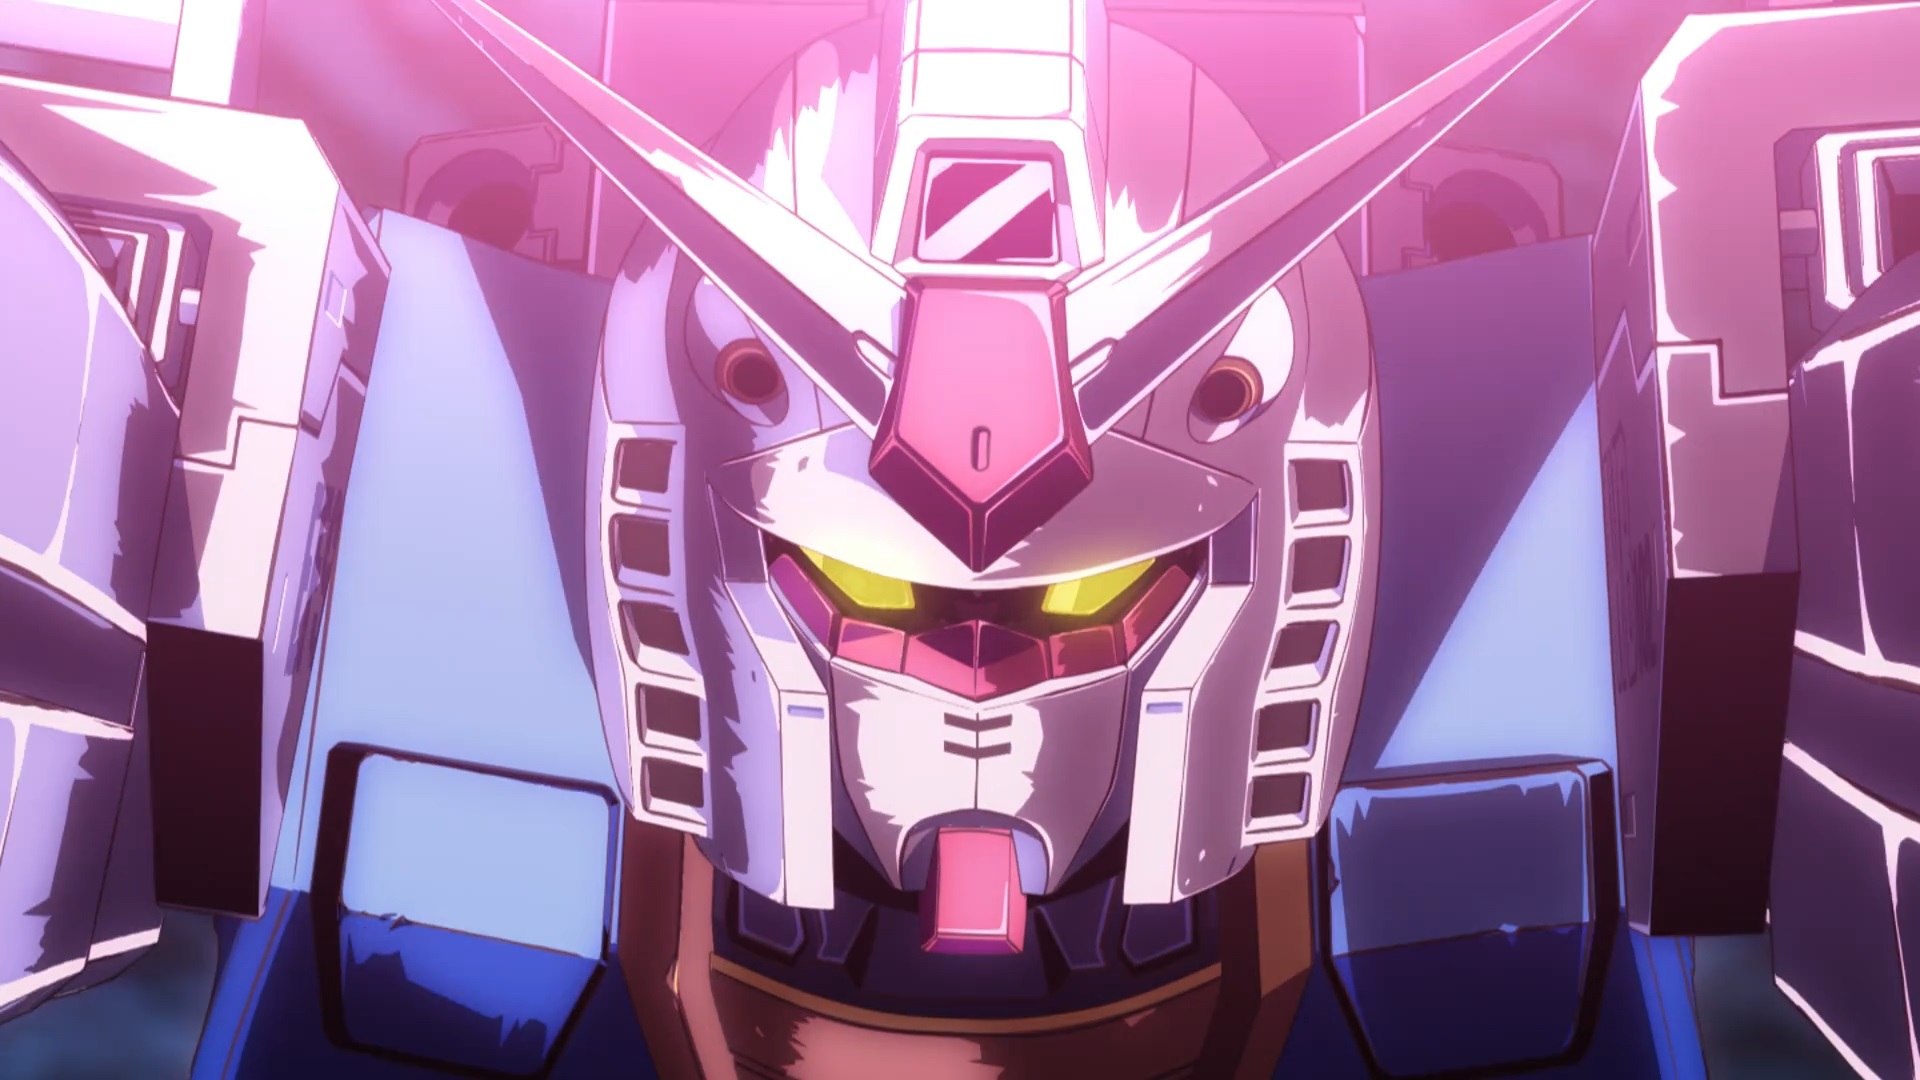 Anime 1920x1080 anime mechs Anime screenshot Mobile Suit Gundam Gundam Super Robot Taisen RX-78 Gundam artwork digital art